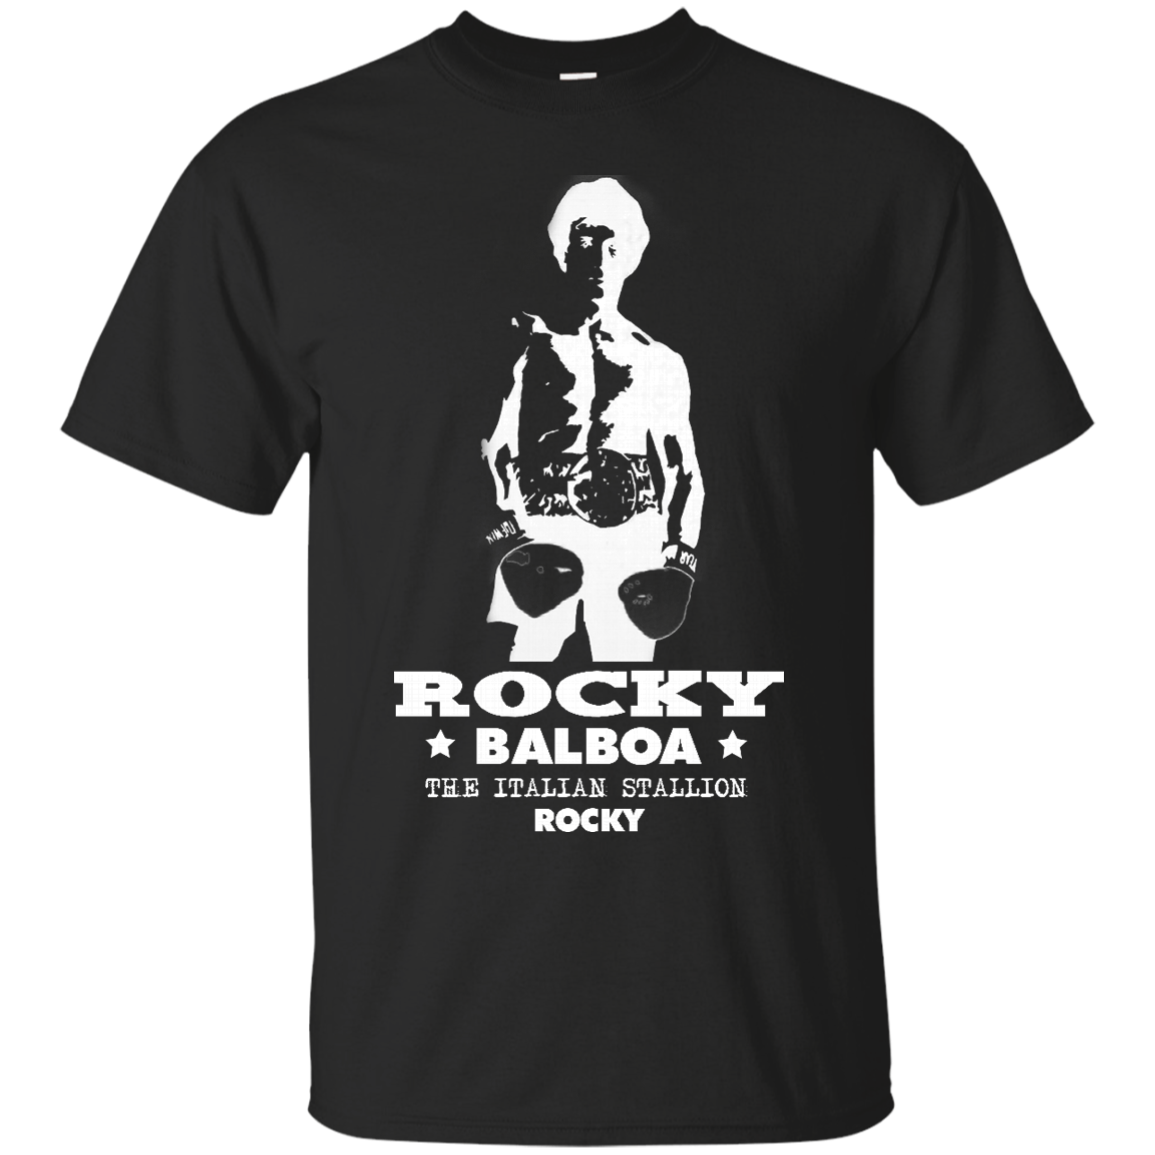 Rocky Balboa Shirts The Italian Stallion - Teesmiley